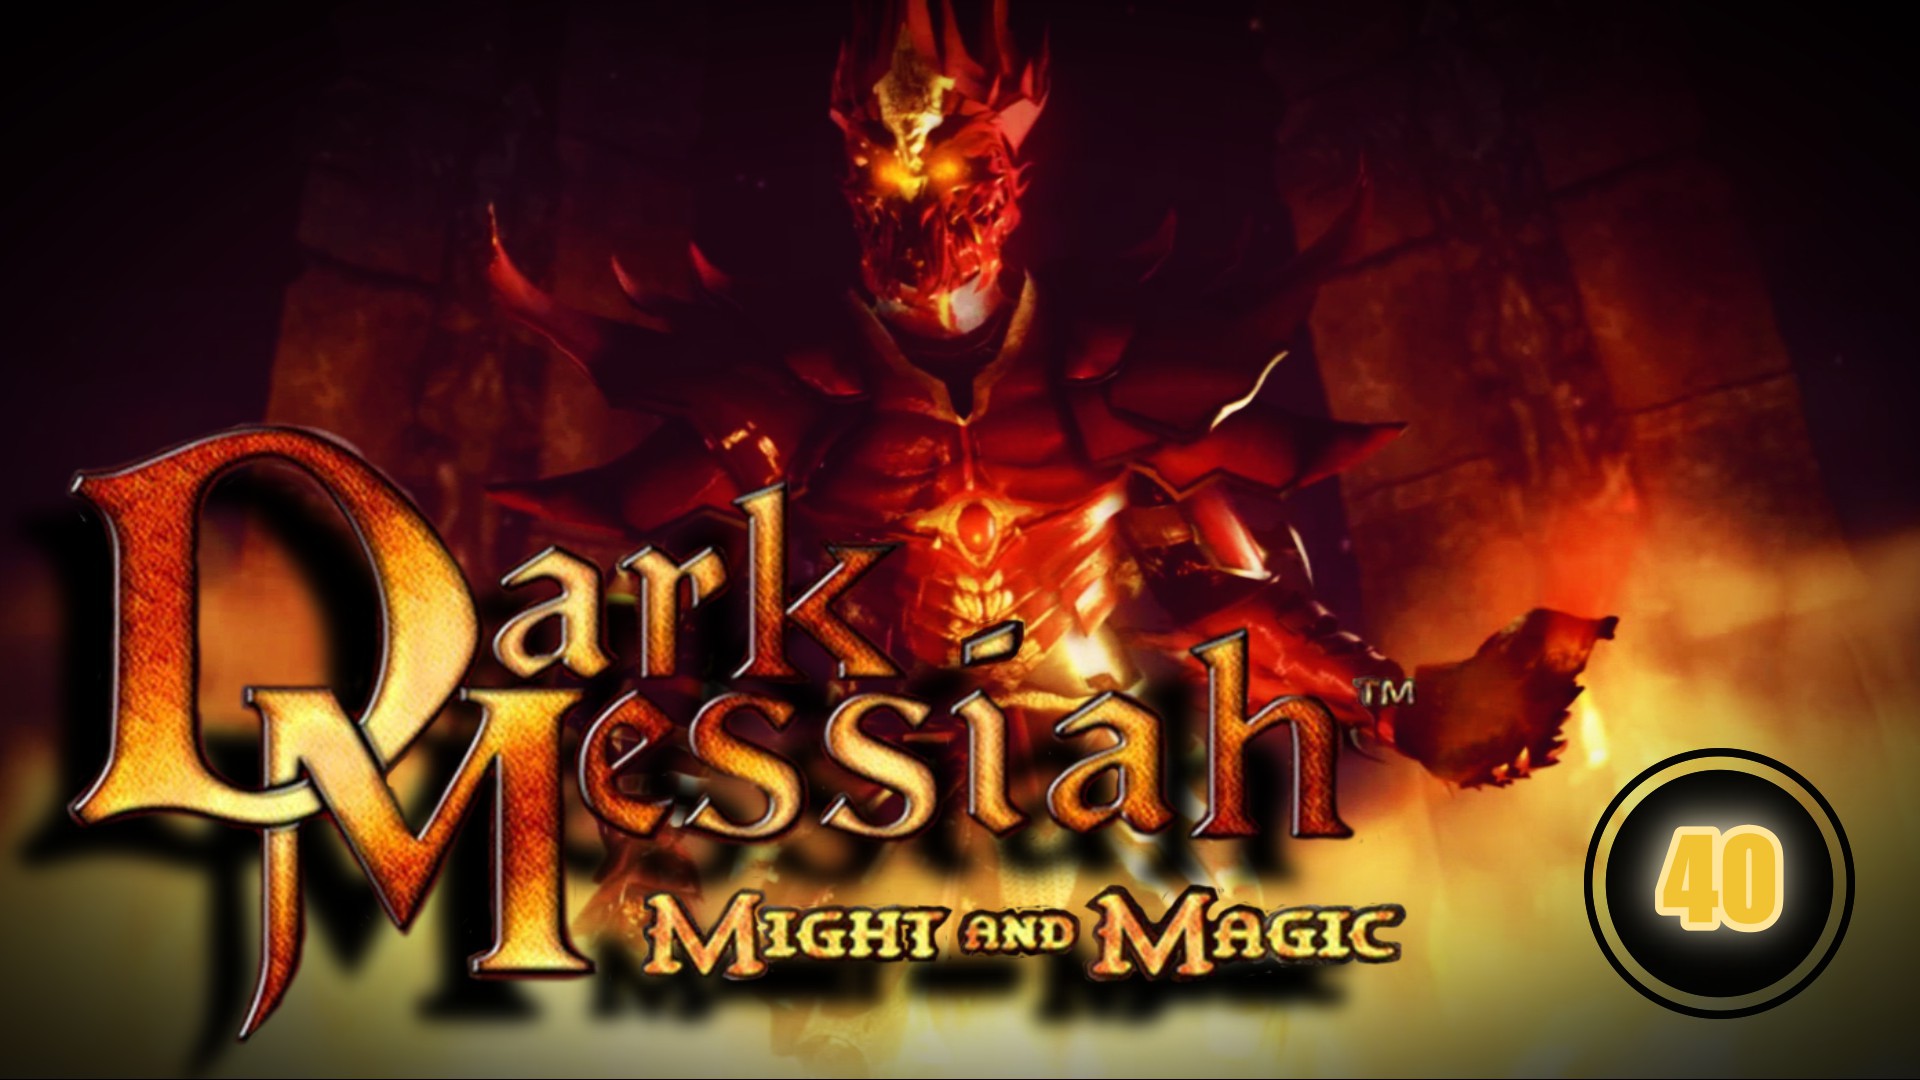 Dark Messiah of Might and Magic 40 развилка